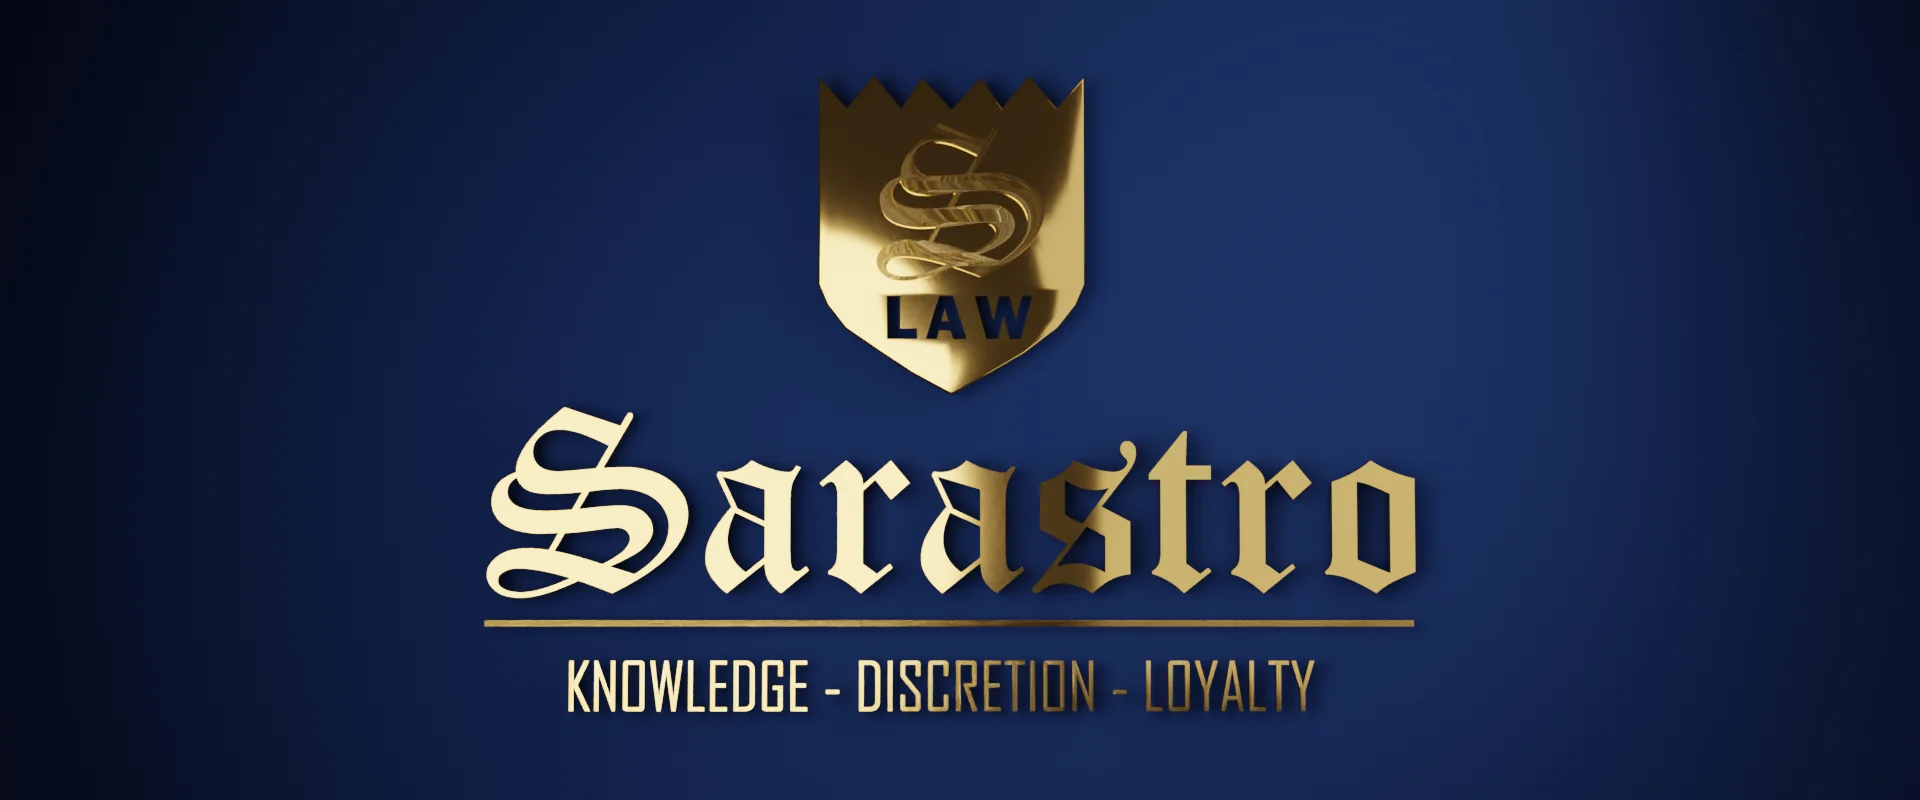 Sarastro Law